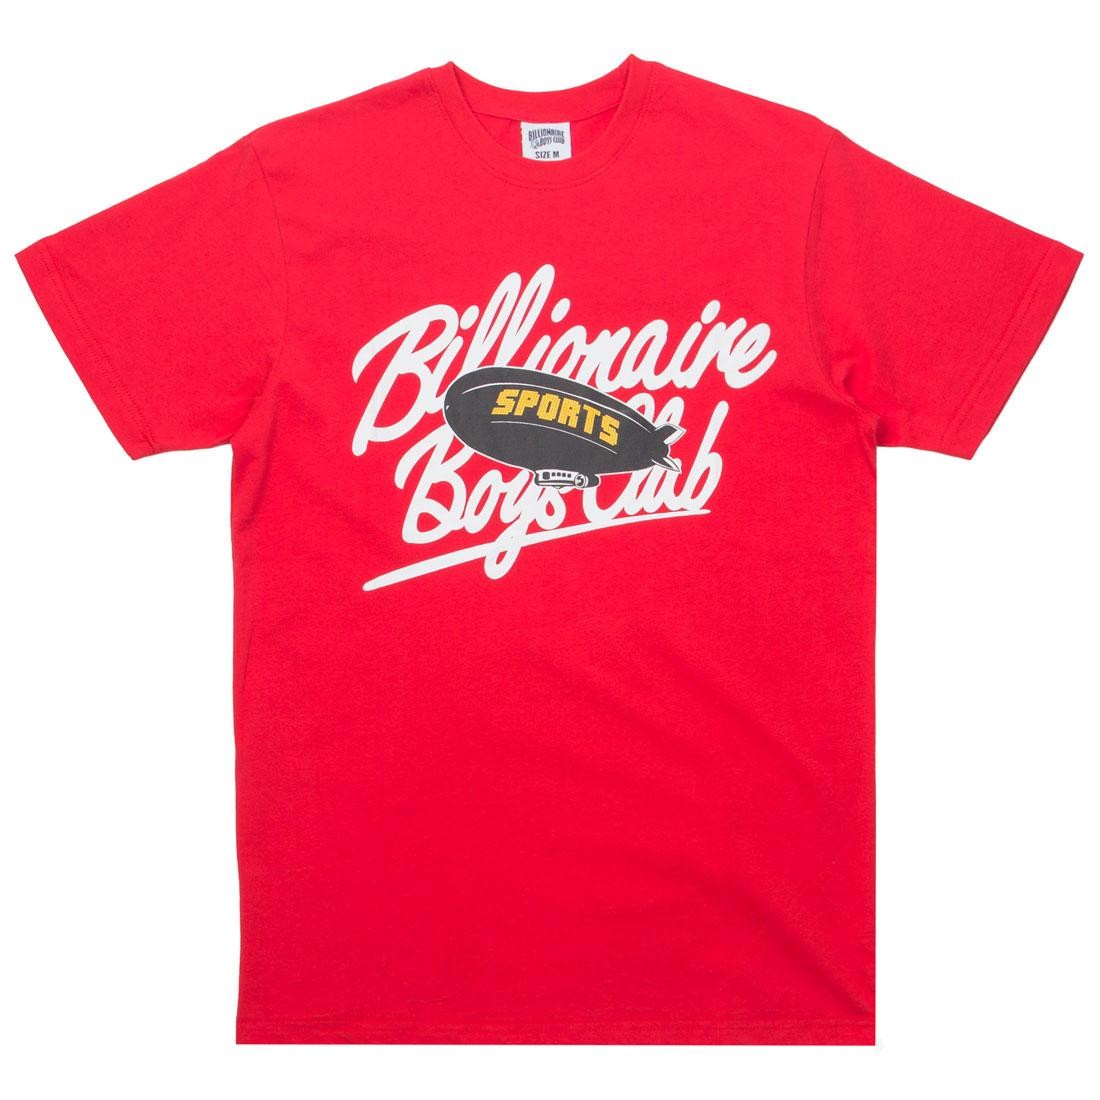 red billionaire t shirt